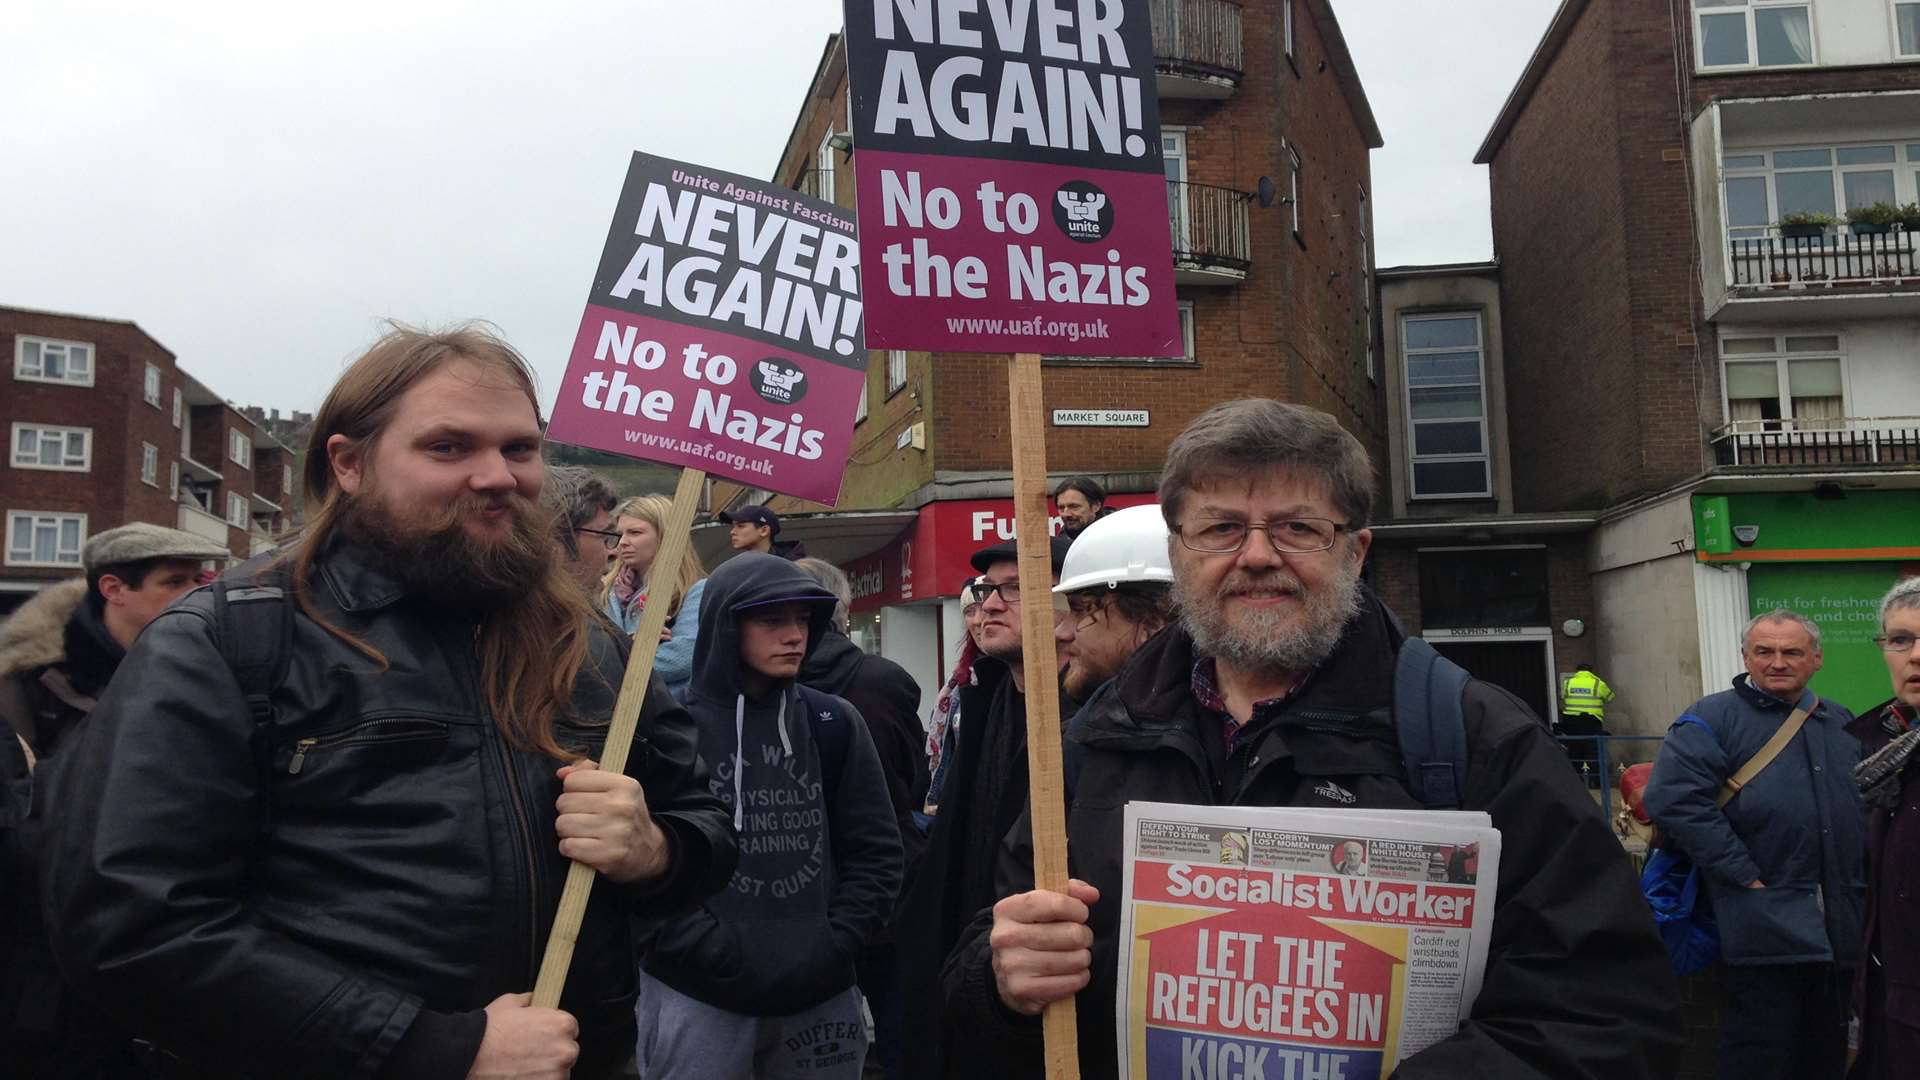 Protestors at the anti-fascist rally